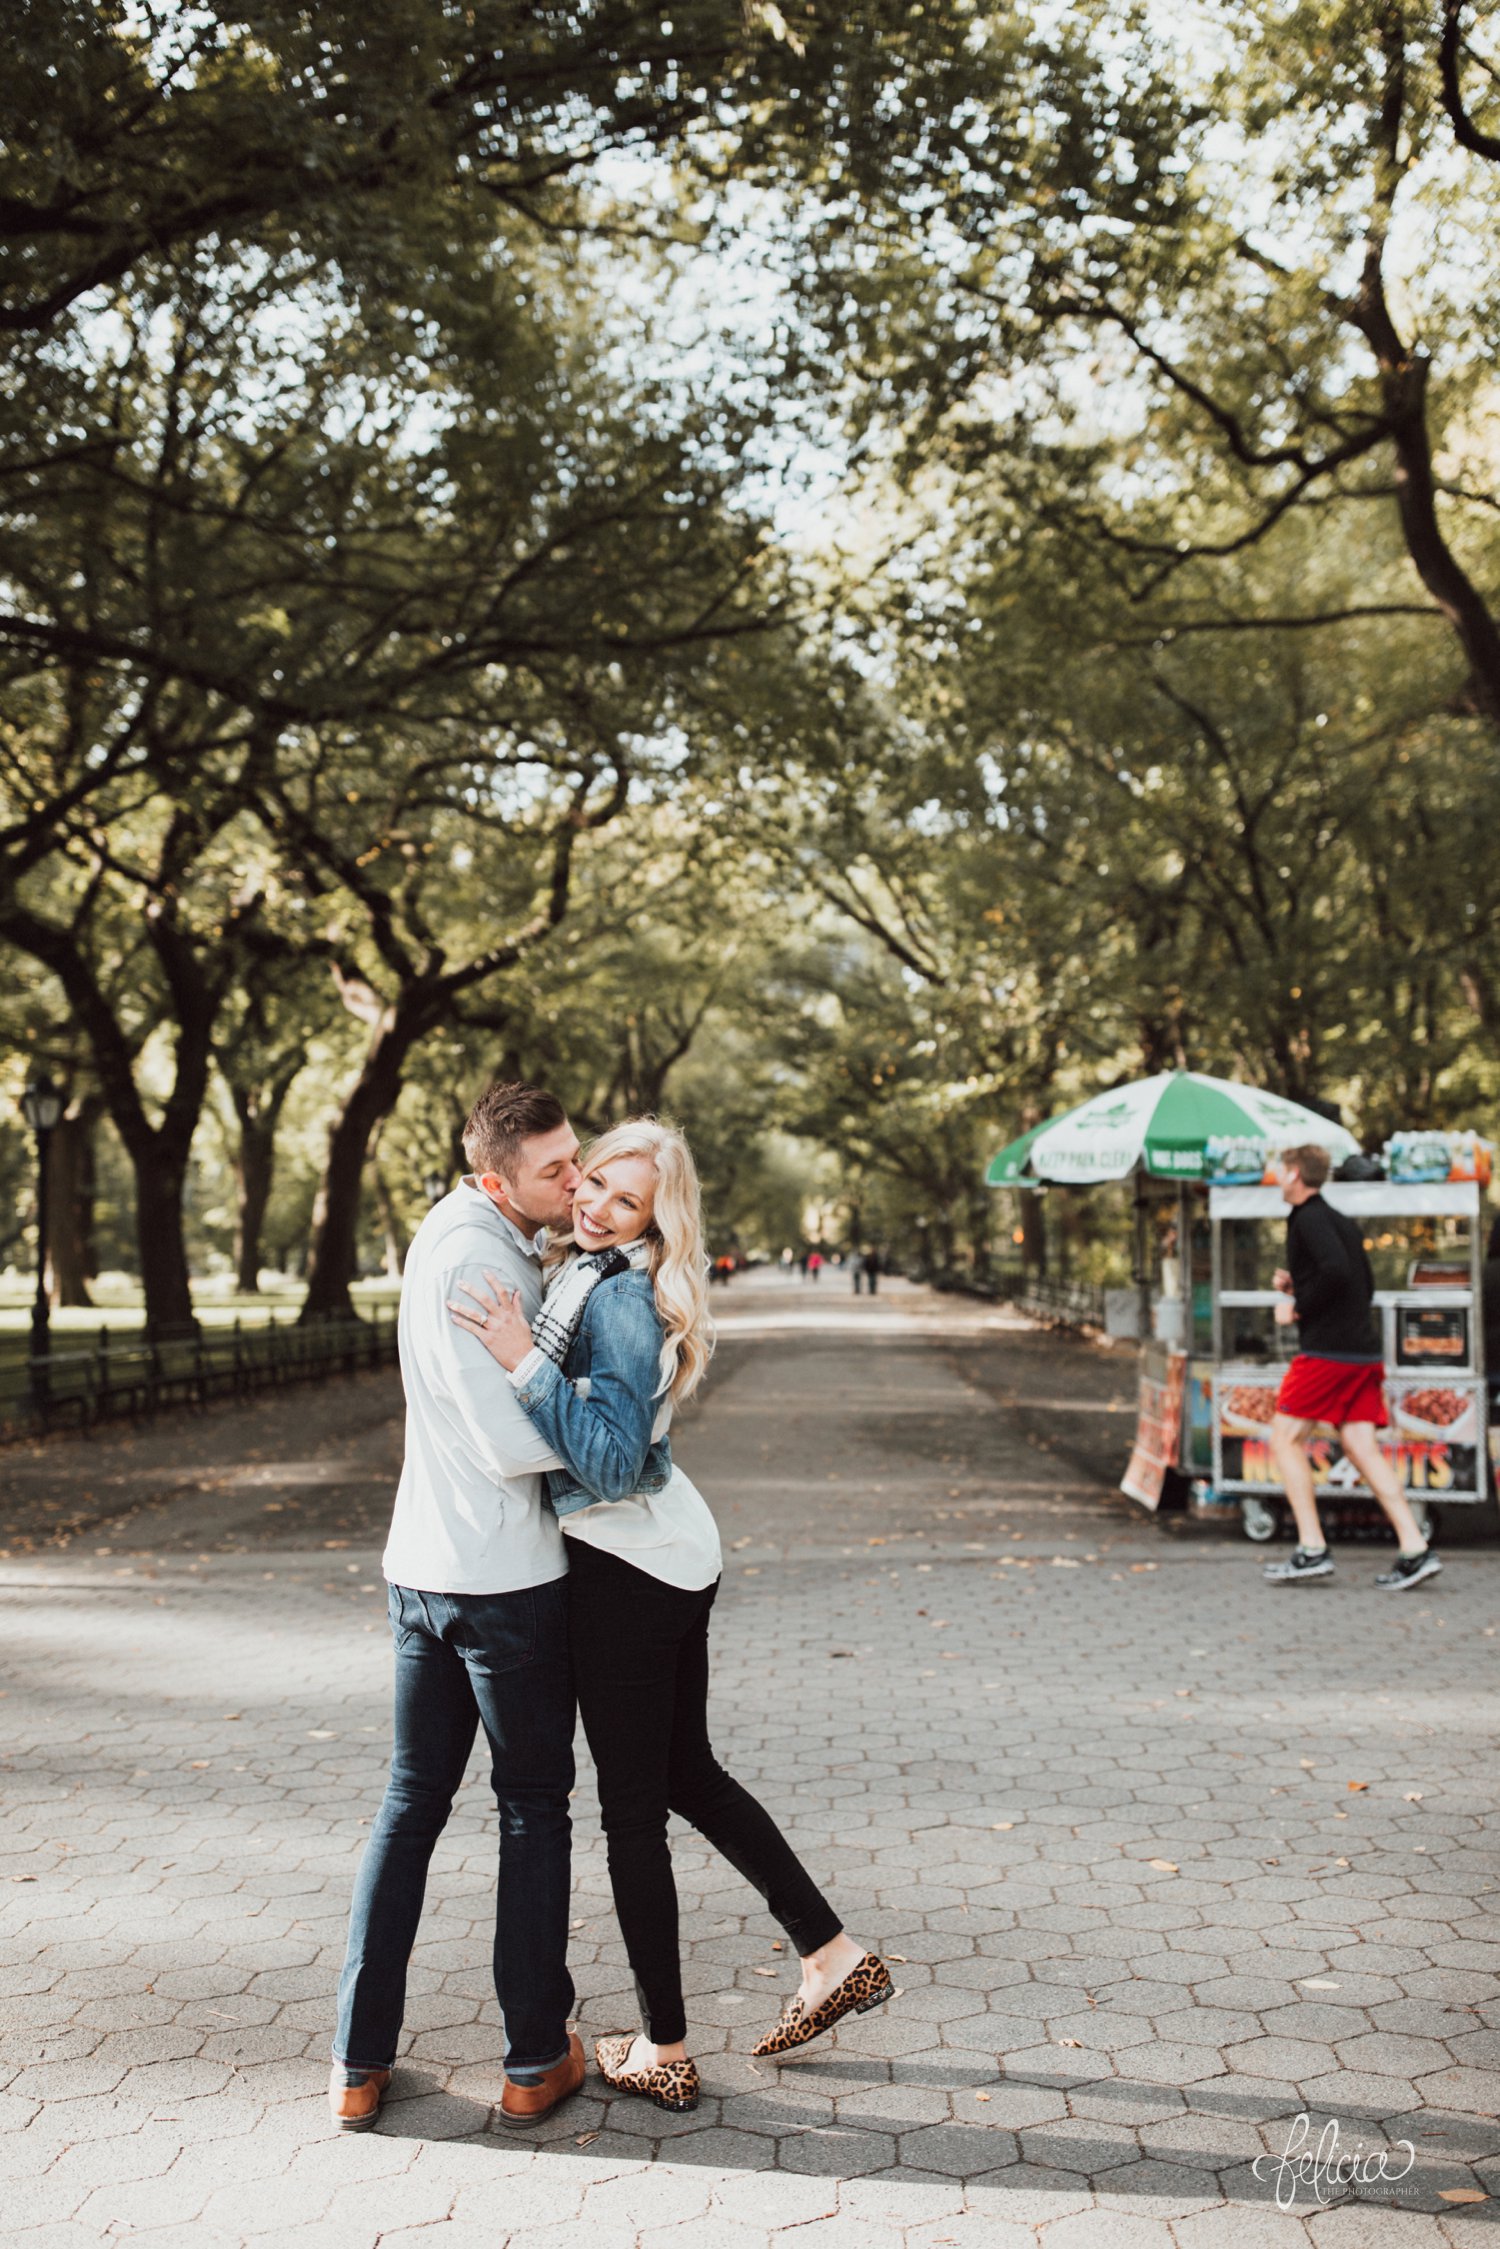 images by feliciathephotographer.com | destination wedding photographer | engagement | new york city | central park | casual | classic | true love | romantic | diamond ring | urban | joyful | cheetah shoes | scarf | sweet | trees | hot dog vender | 